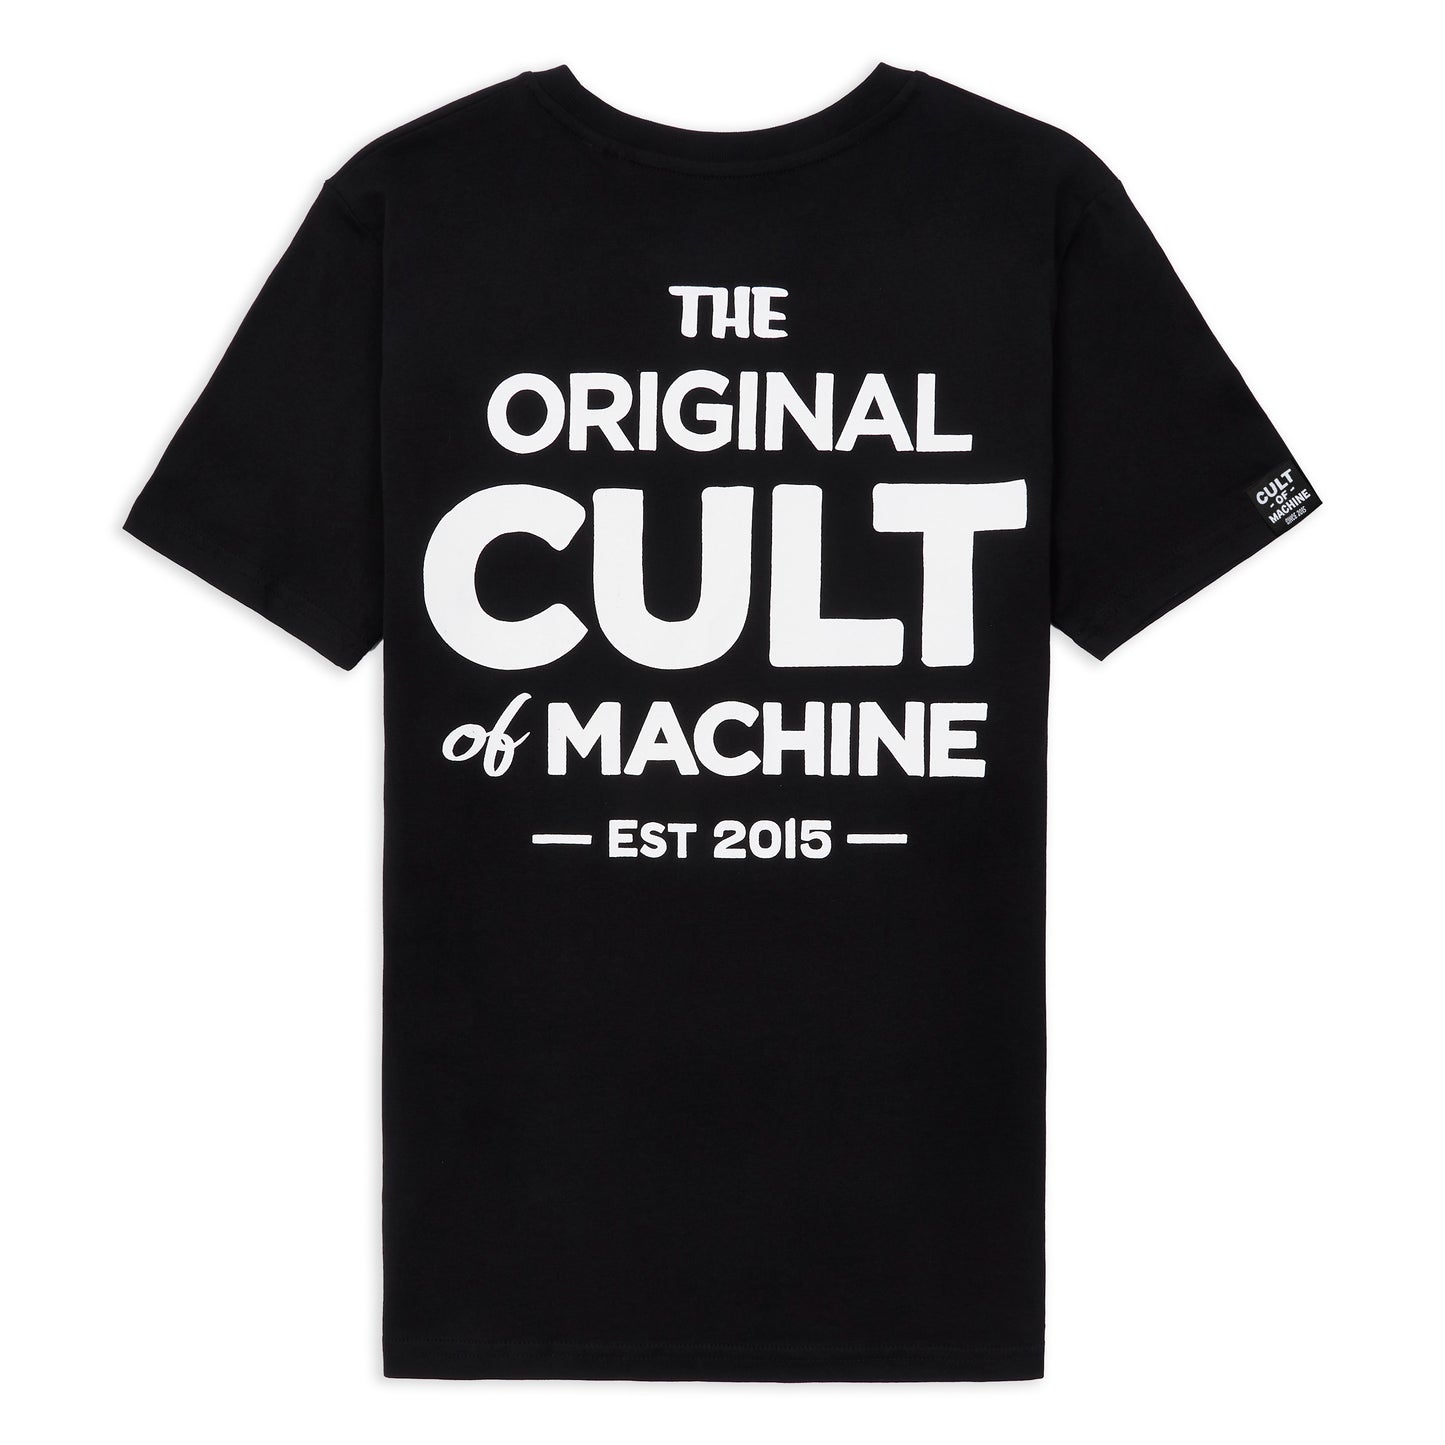 Cult of Machine. Tee. Black